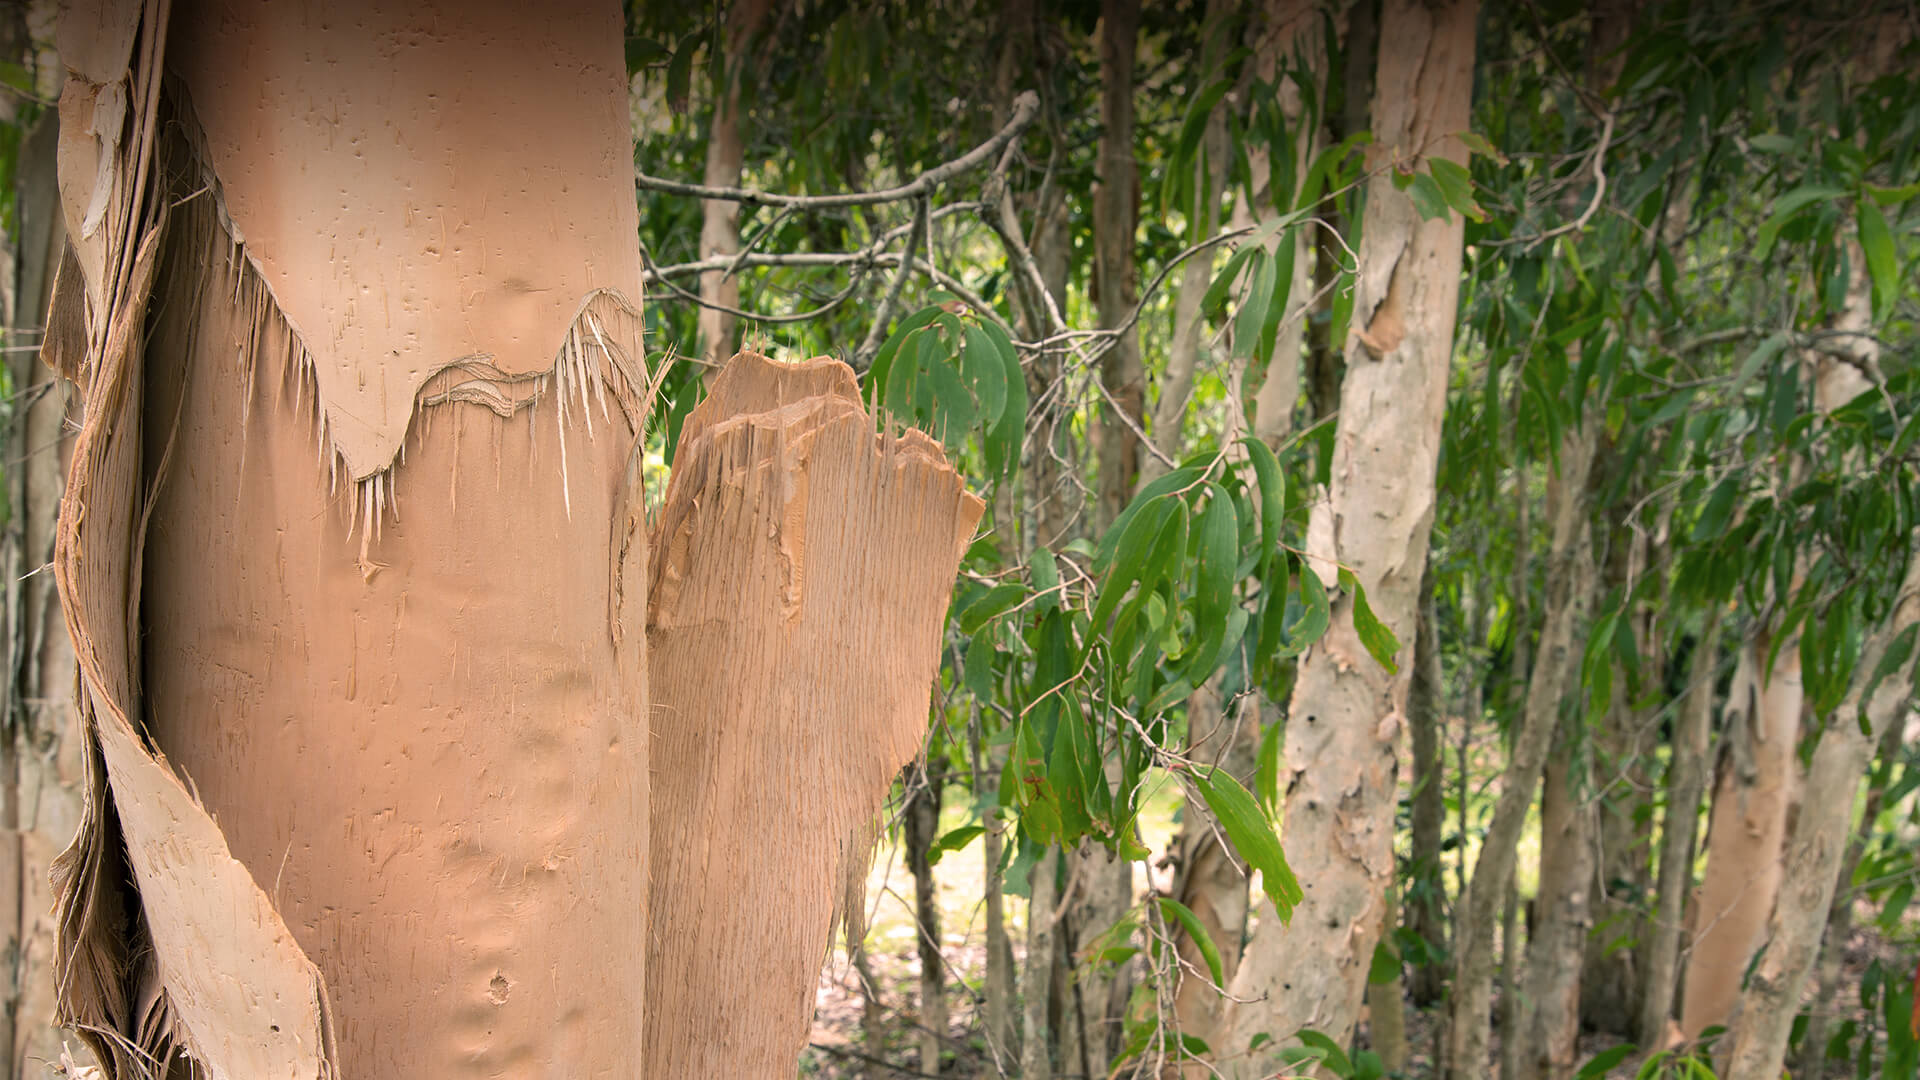 Australian paperbark tree with peeling, cork-like bark.